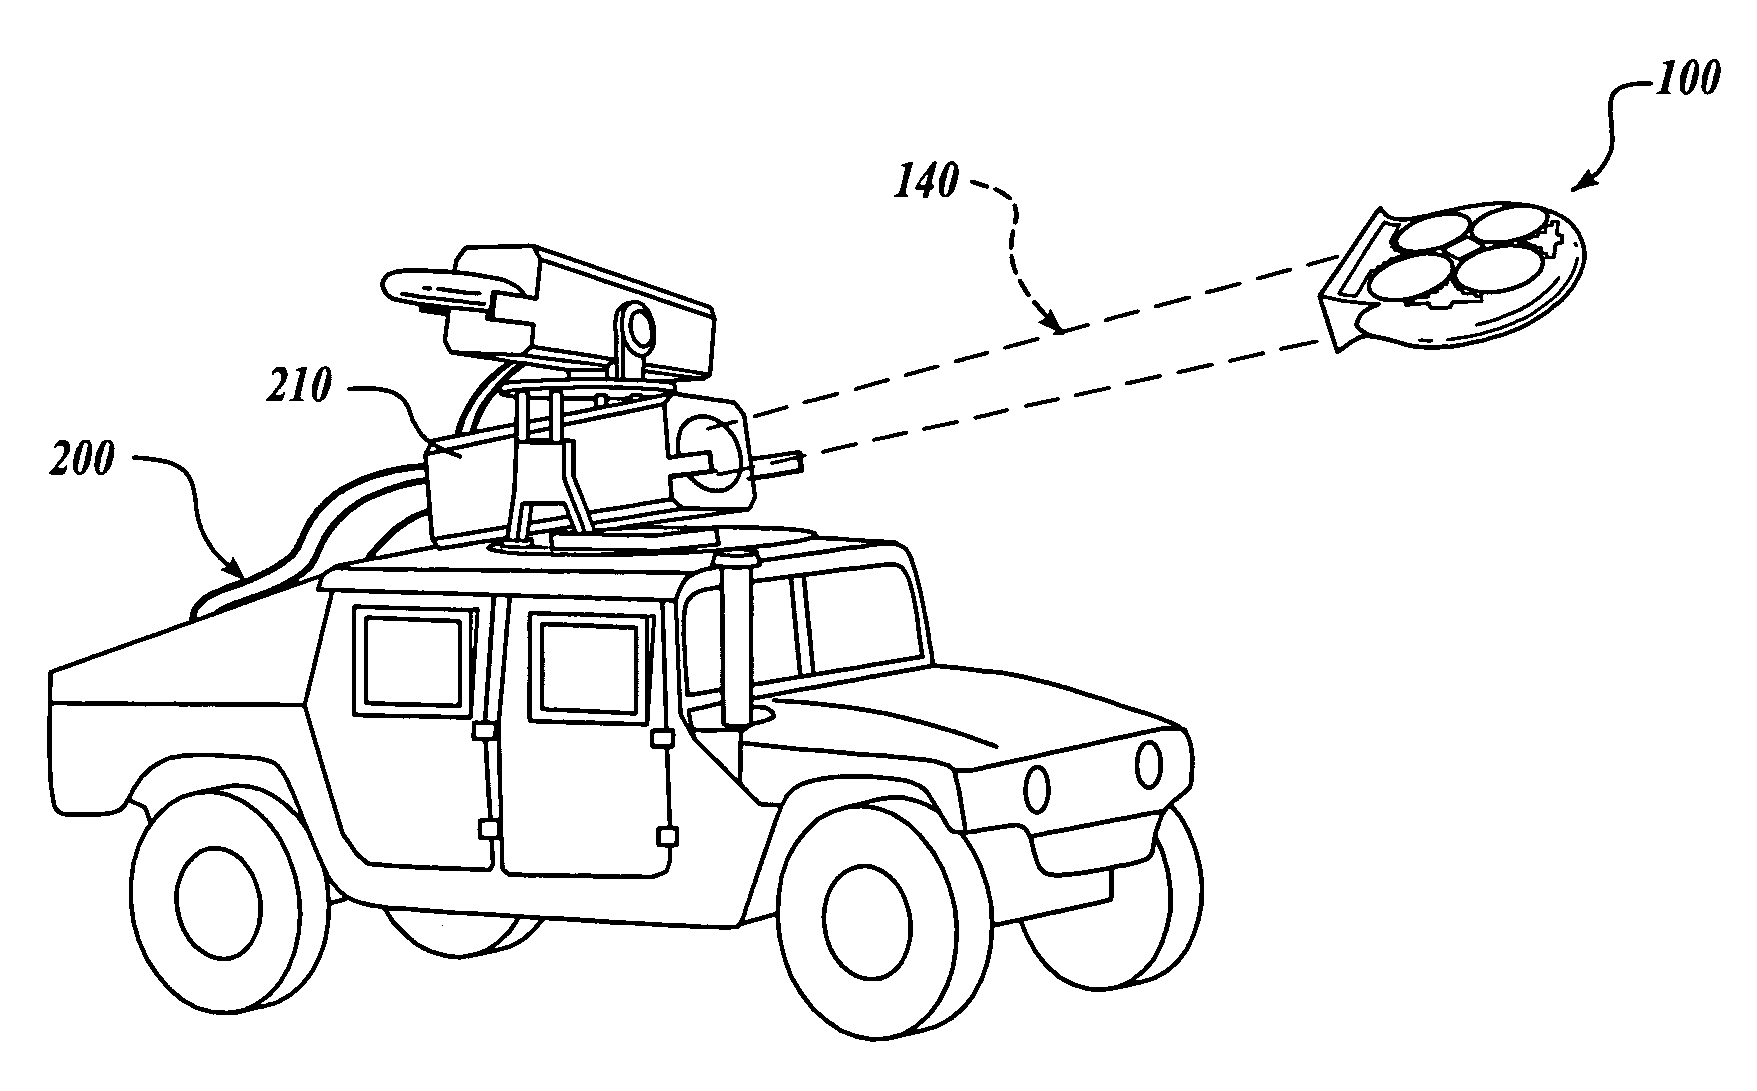 Laser-tethered vehicle